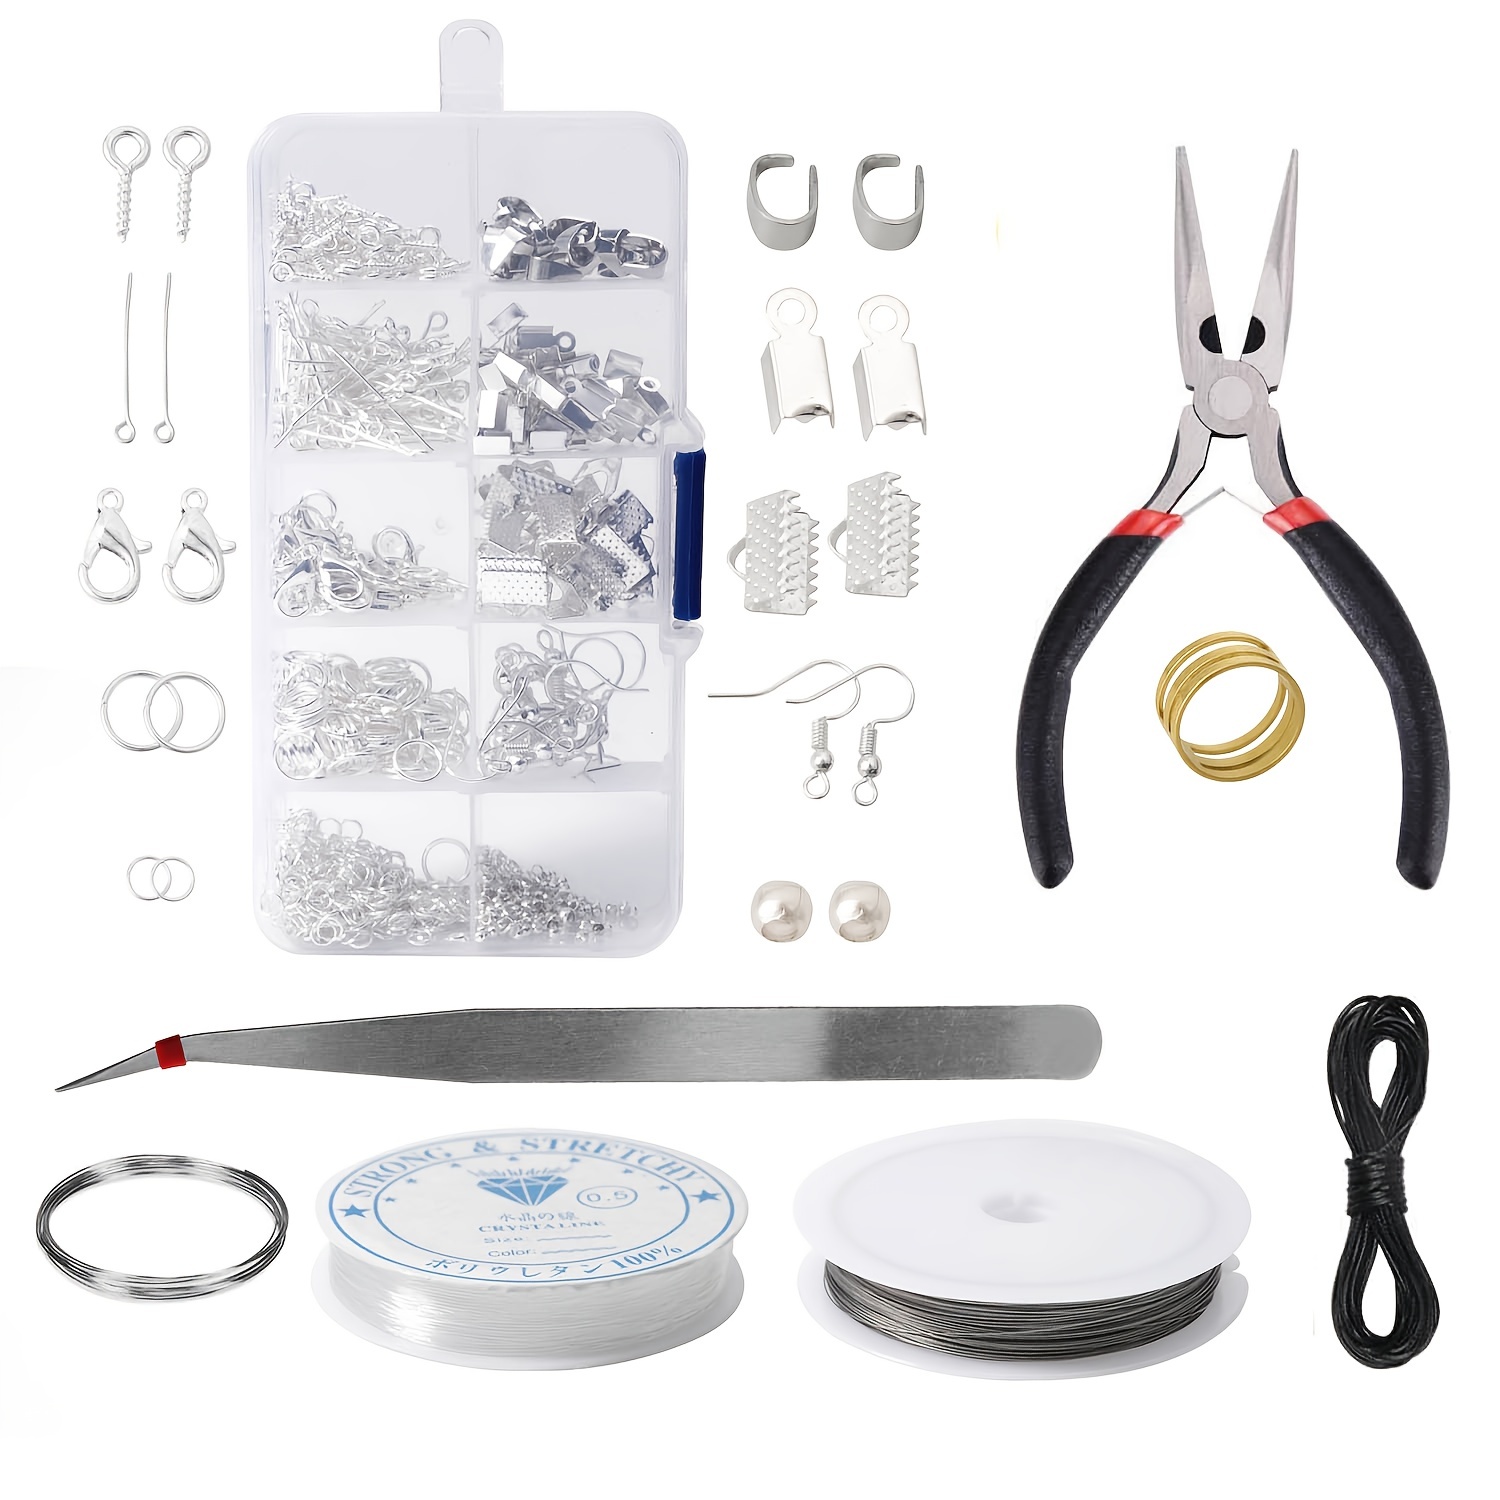  Kit de suministros para hacer aretes, kit de fabricación de  aretes con ganchos para aretes, anillos de salto, alicates de joyería,  pinzas, línea de cristal, línea de alambre de acero en